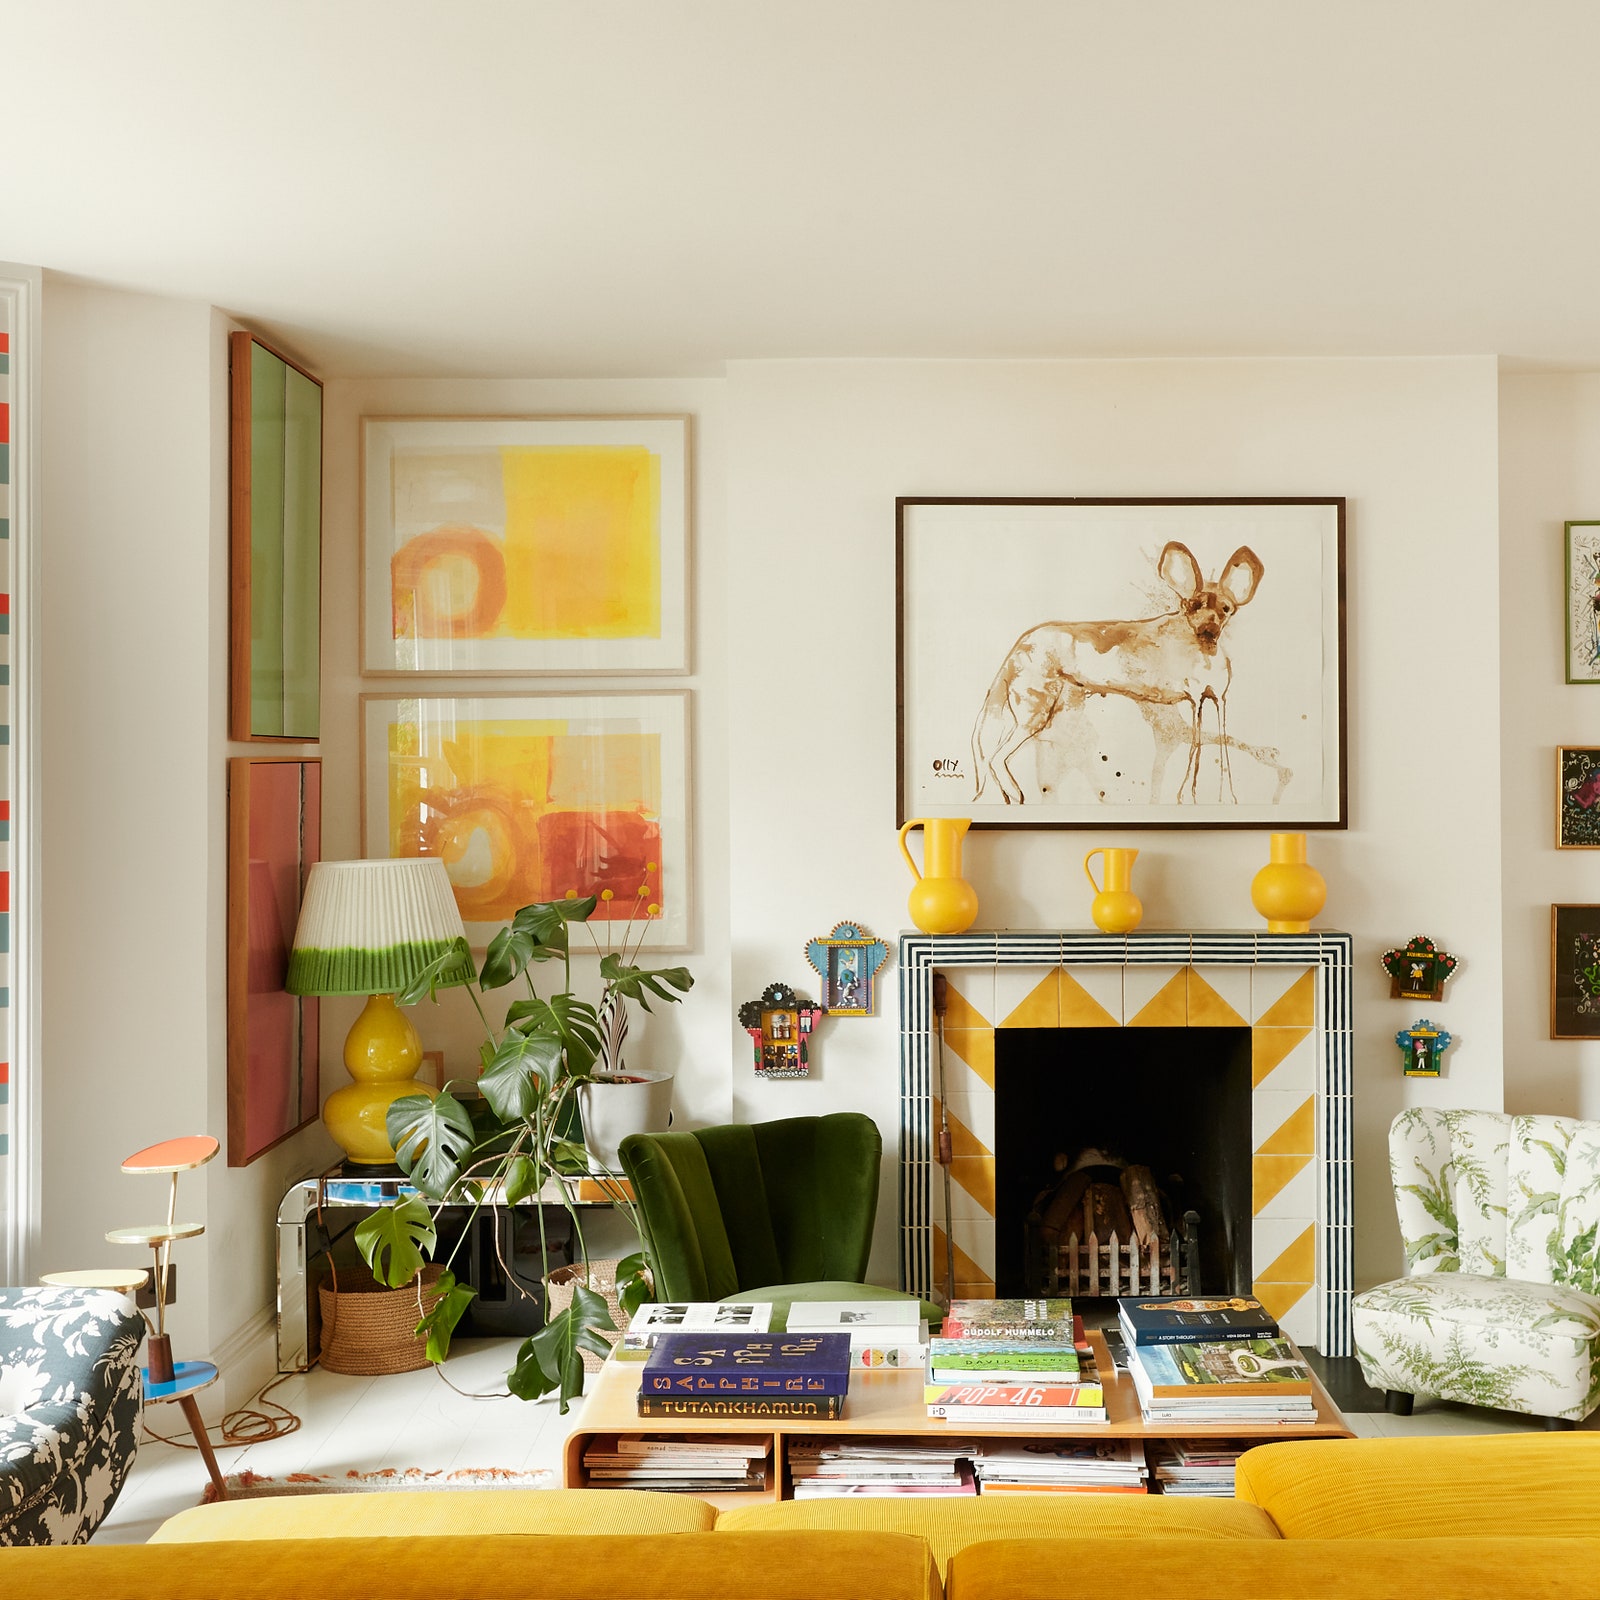 Travel editor Melinda Stevens' richly colourful London house